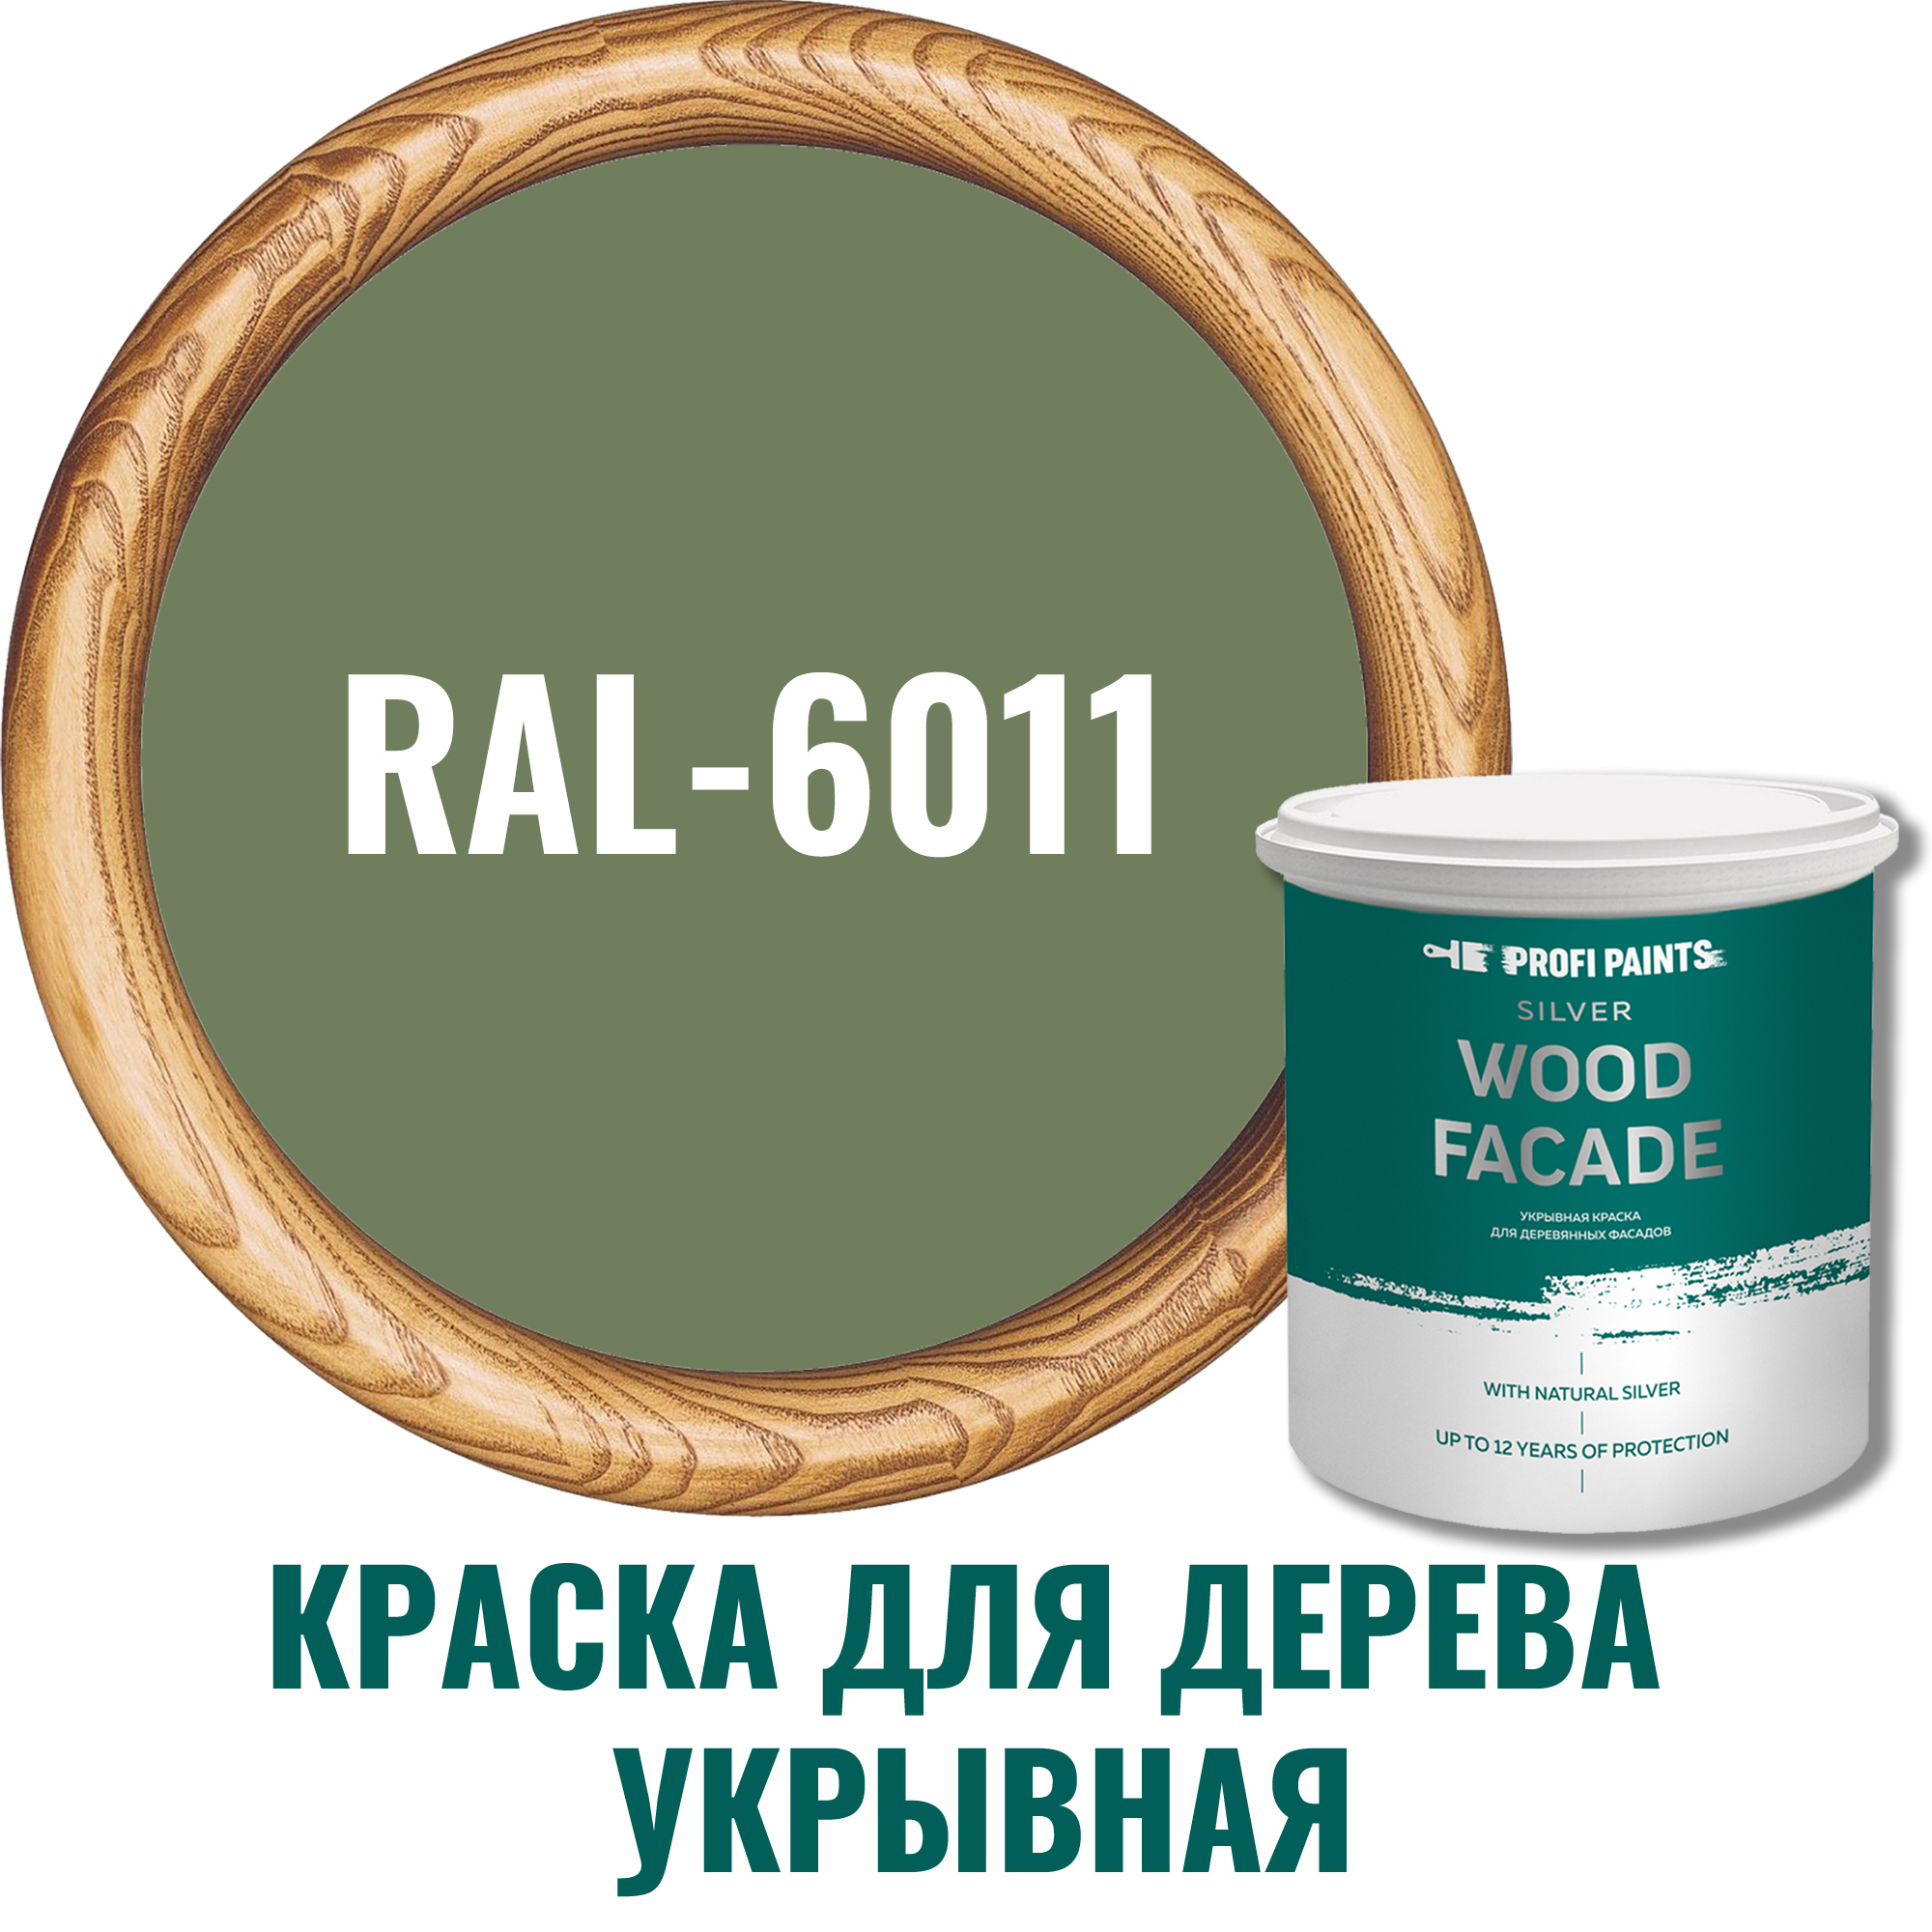 91106635 Краска для дерева 11276_D SILVER WOOD FASADE цвет RAL-6011 зелено-серый 2.7 л STLM-0487628 PROFIPAINTS